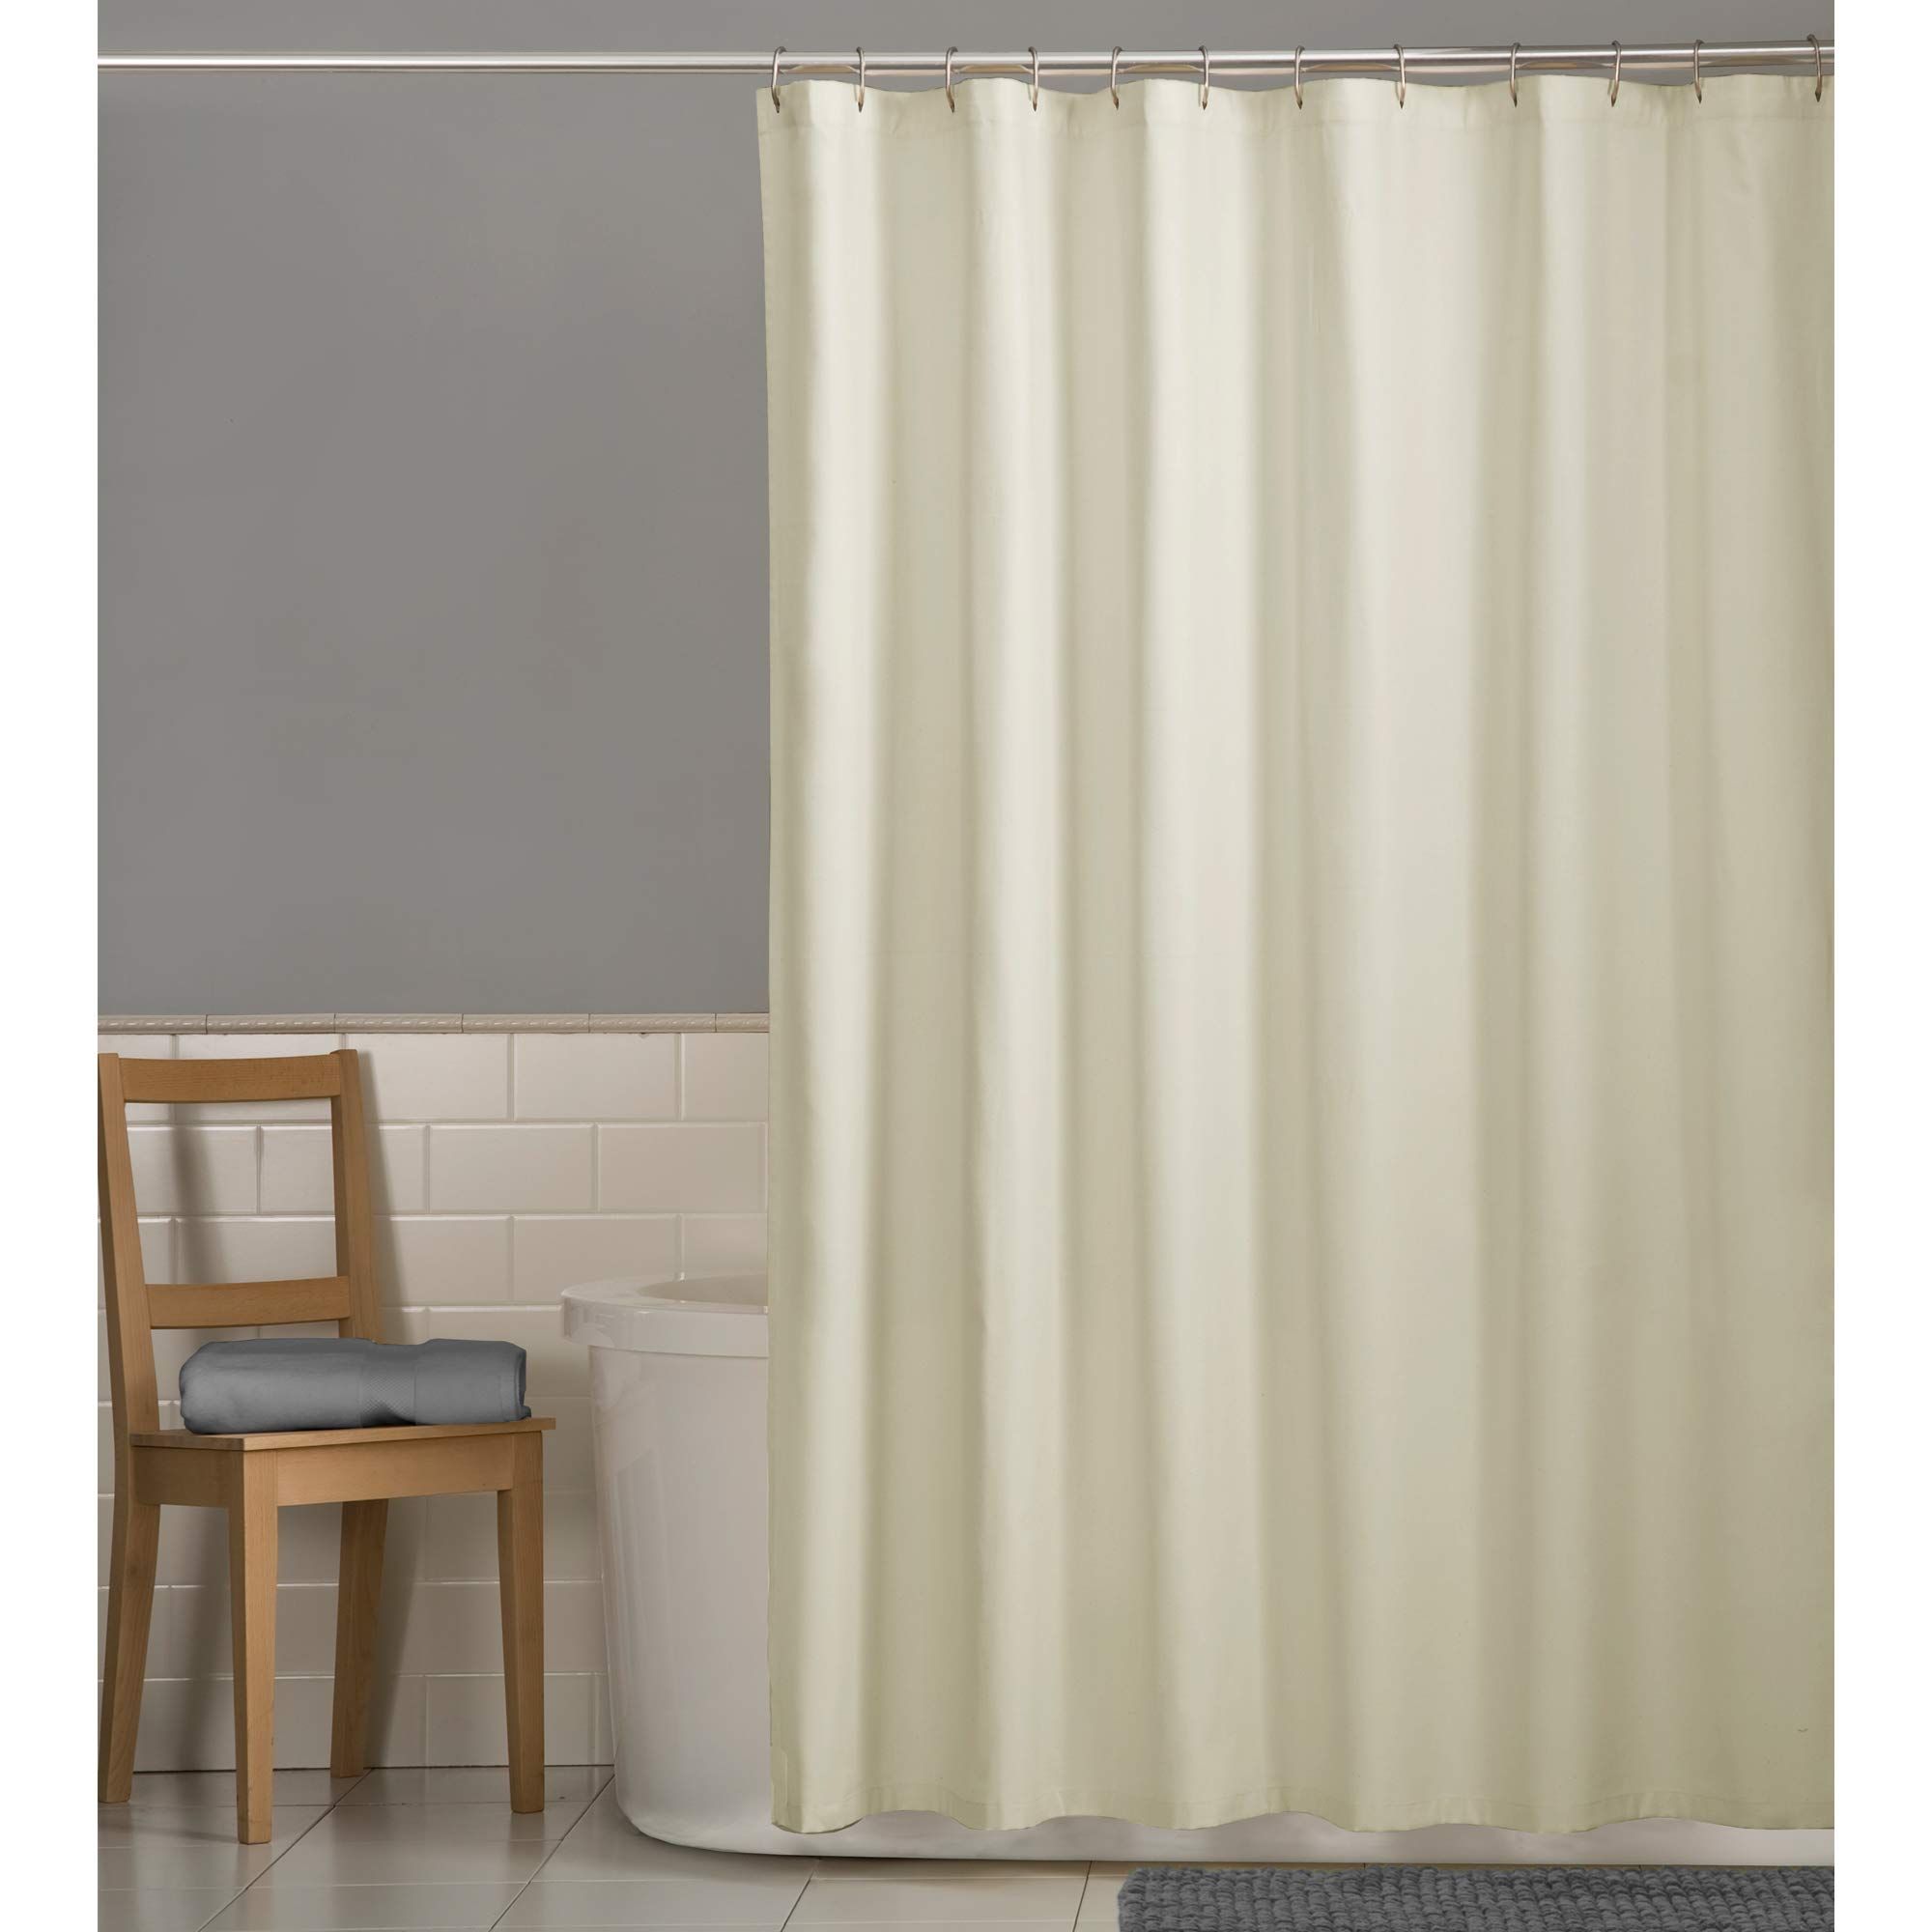 19 Best Shower Curtains 2021 The, Best Non Plastic Shower Curtain Liner